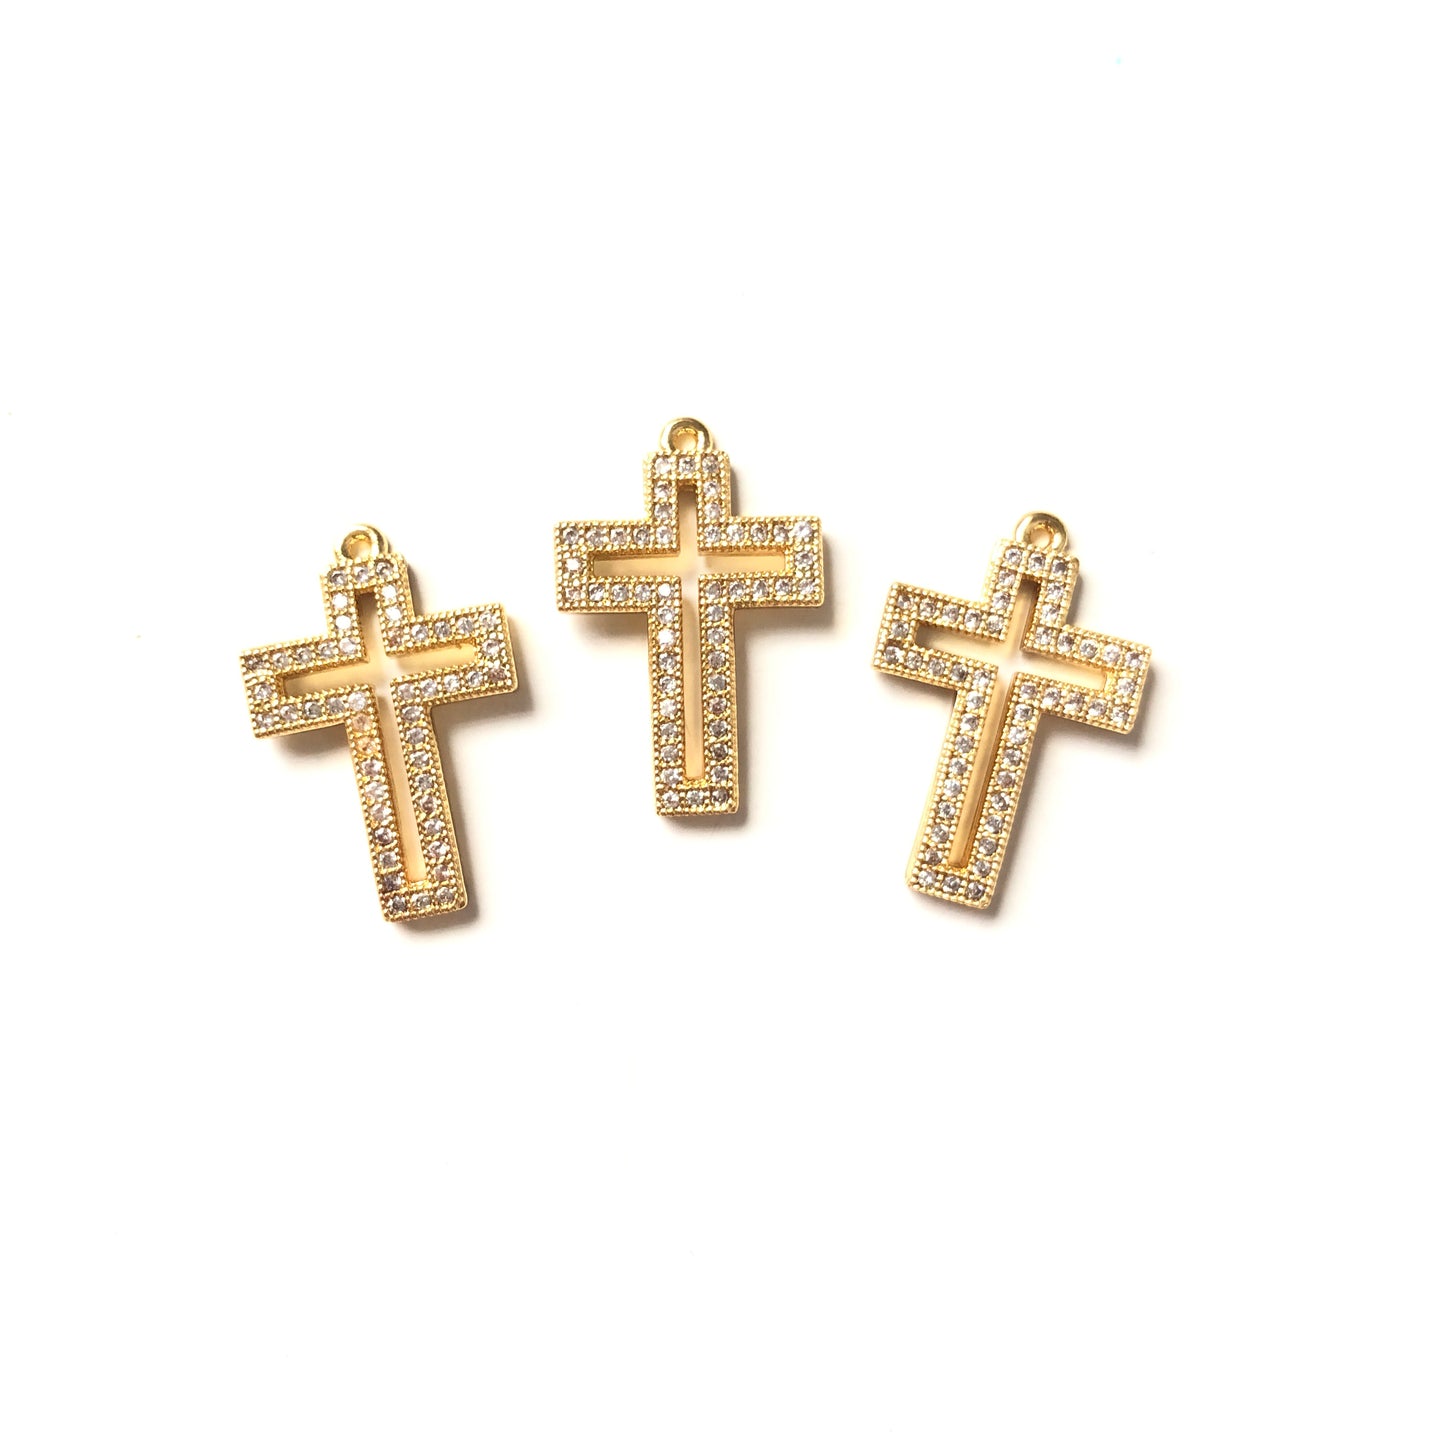 10pcs/lot 24*13mm CZ Paved Cross Charms Gold CZ Paved Charms Crosses Charms Beads Beyond